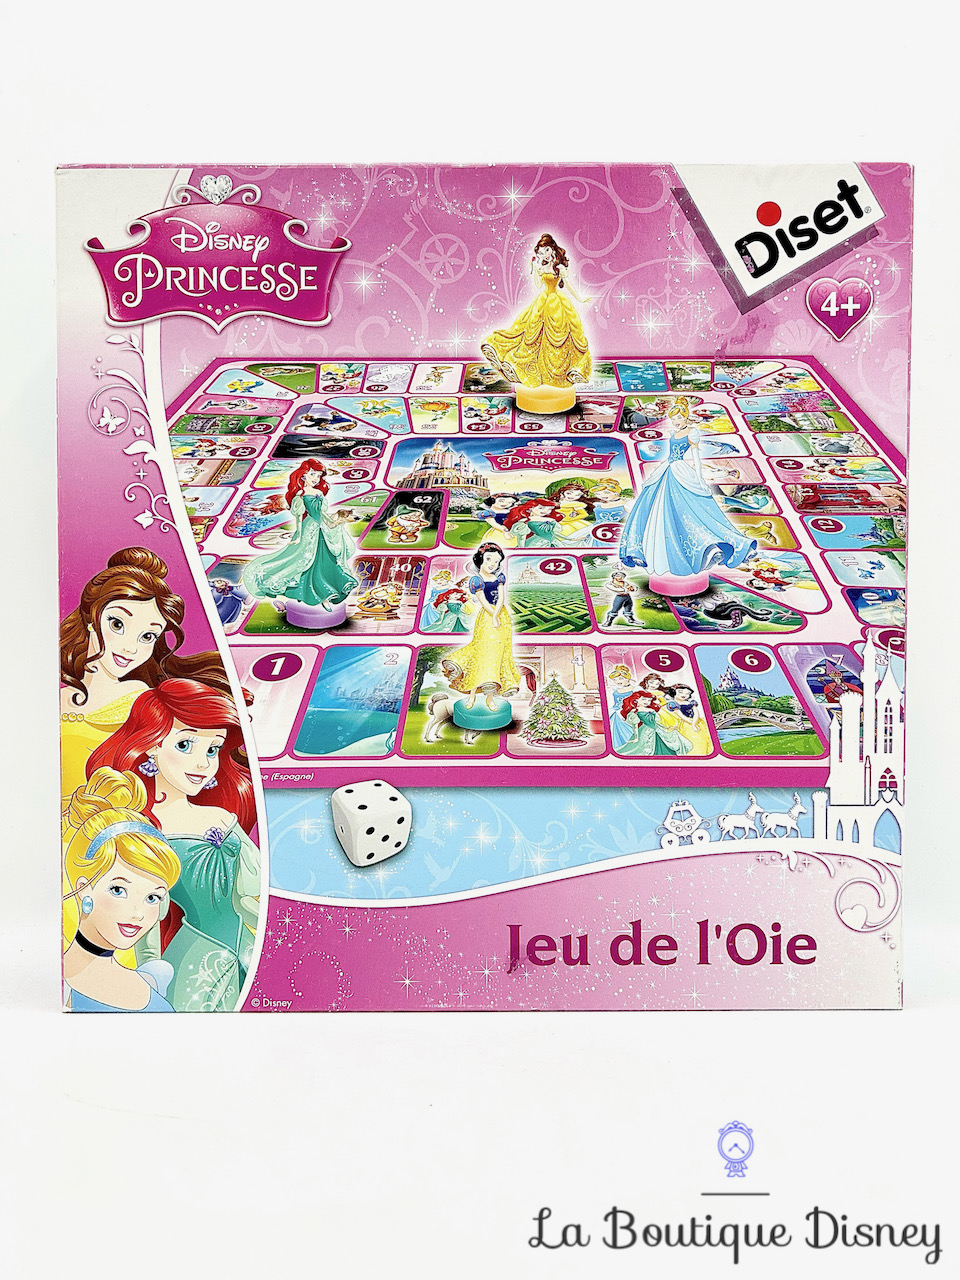 jeu-de-société-jeu-de-oie-disney-princesse-diset-2